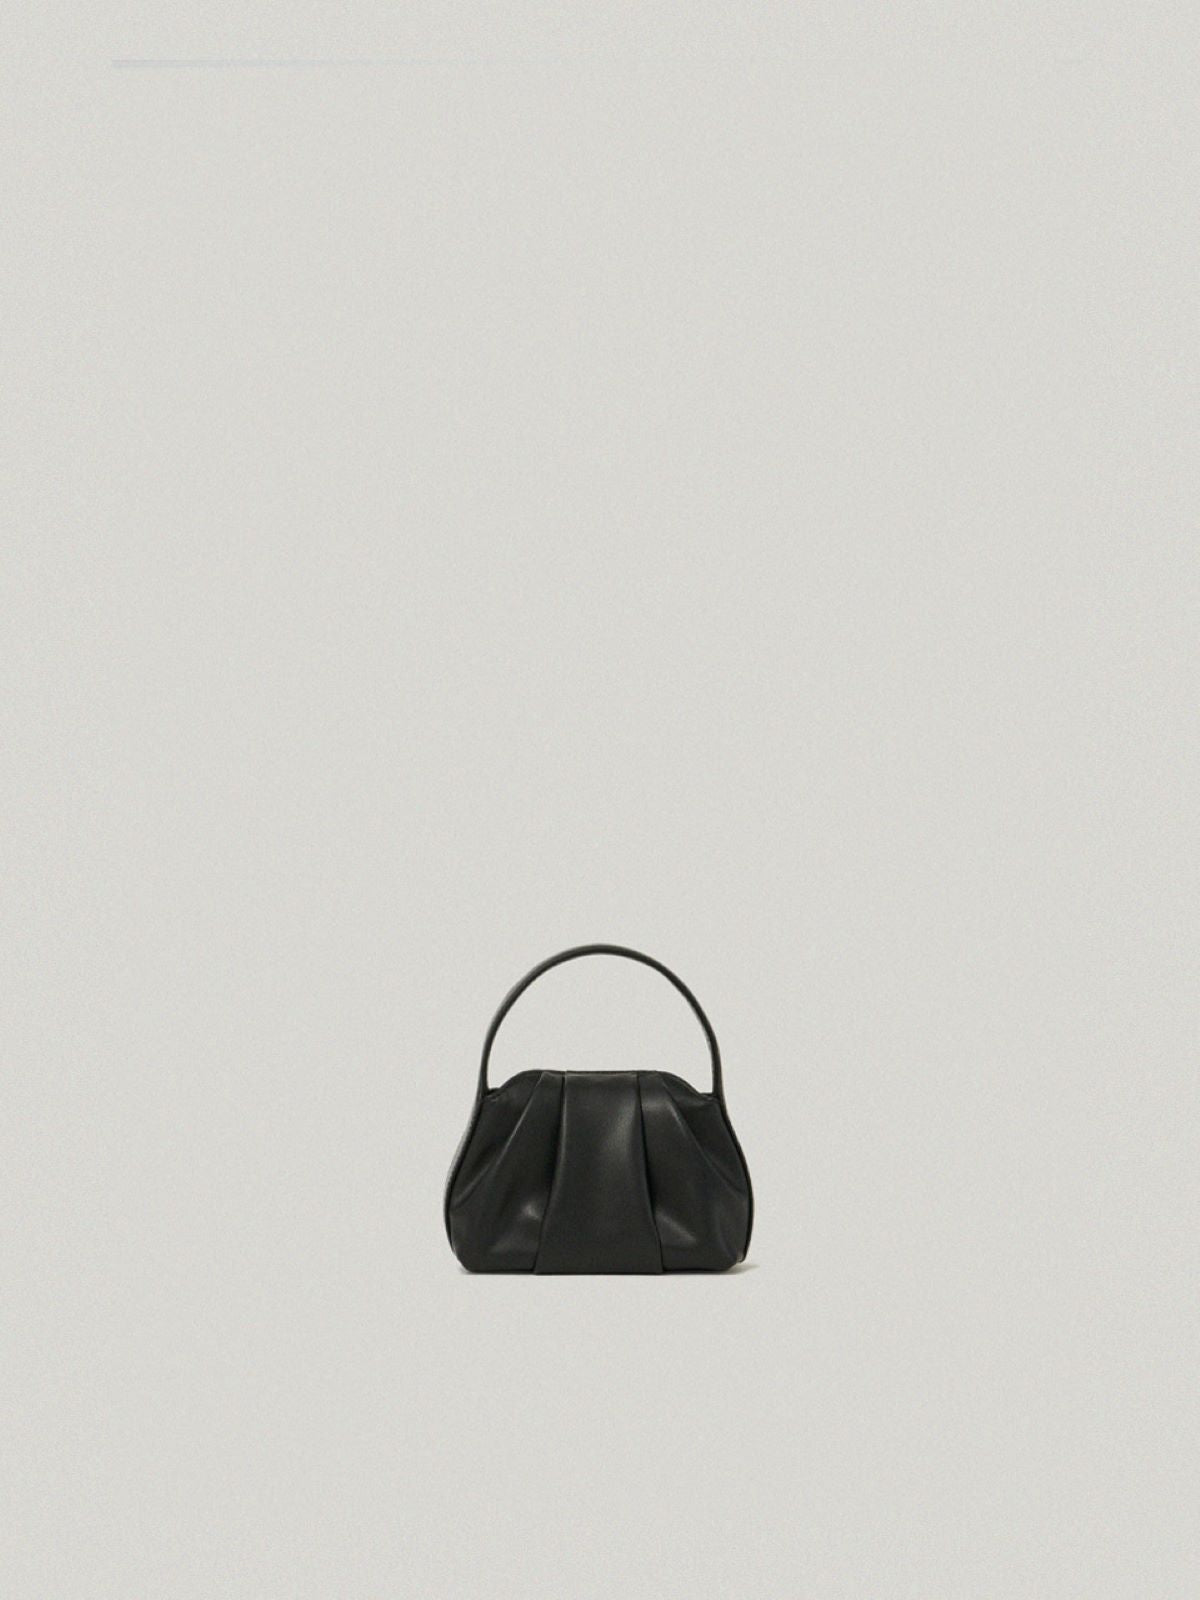 Fantine Petit Bag In Soft Black